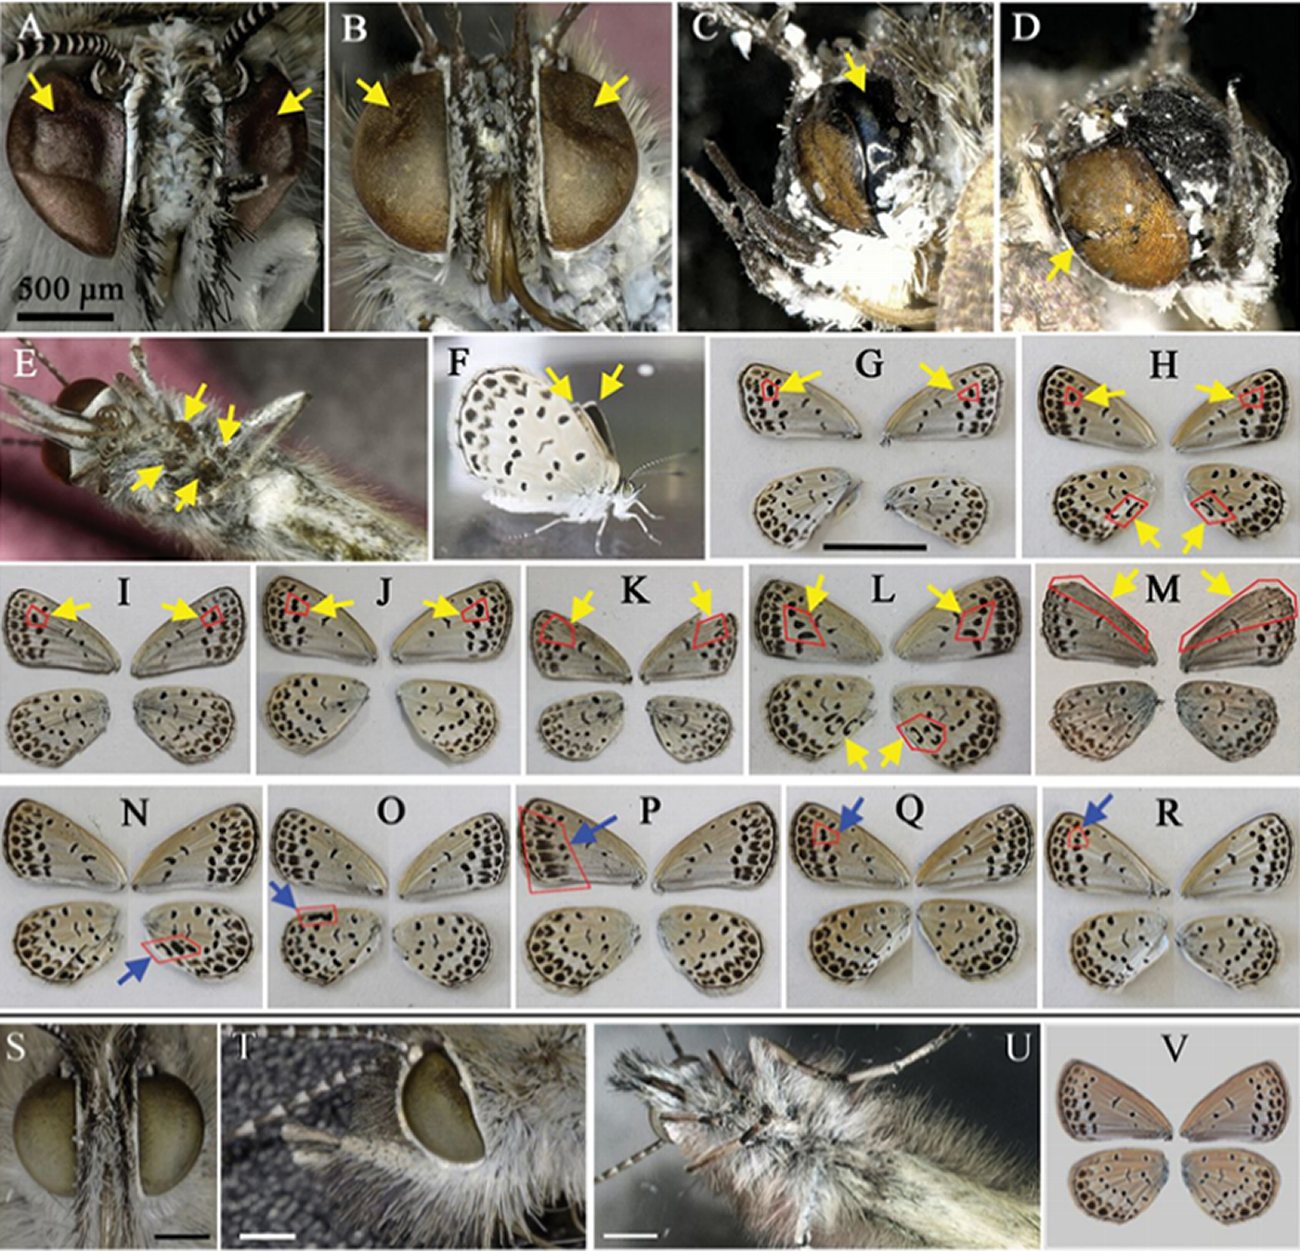 Mutated butterflies of Fukushima scientific study. 